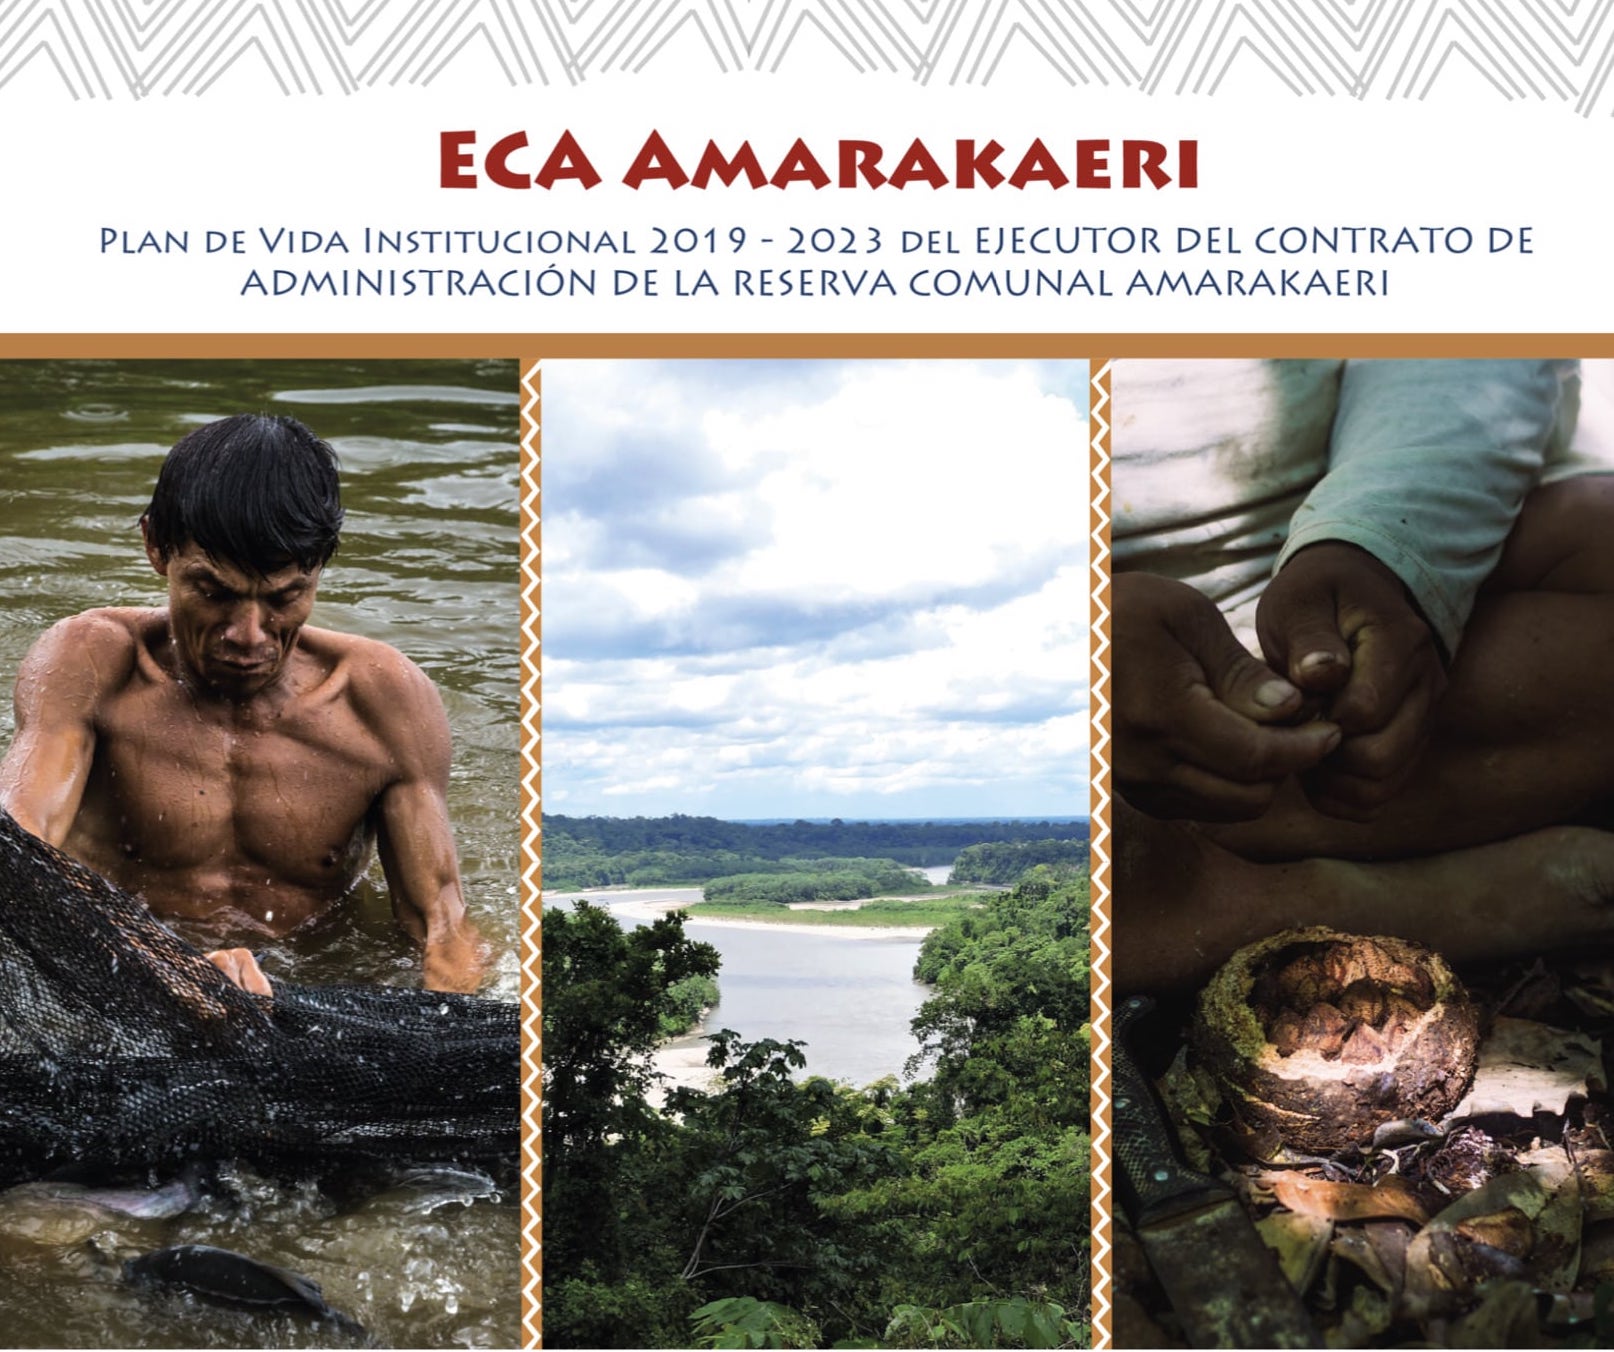 Plan de vida institucional 2019 – 2023 del ECA Amarakaeri